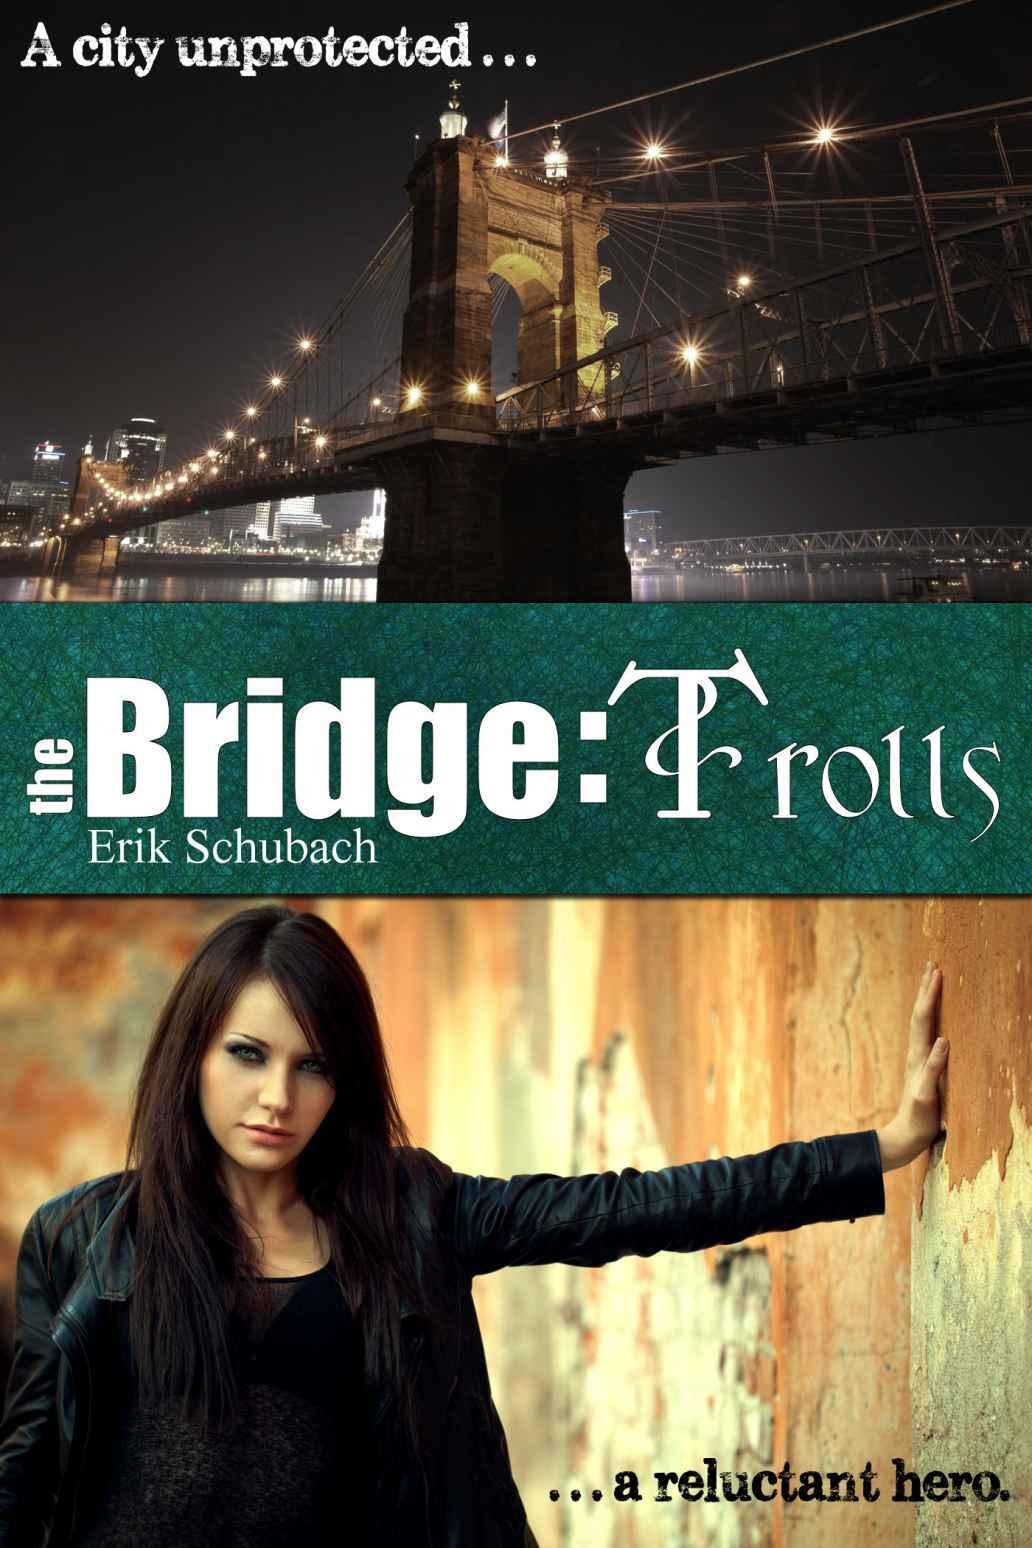 The Bridge: Trolls